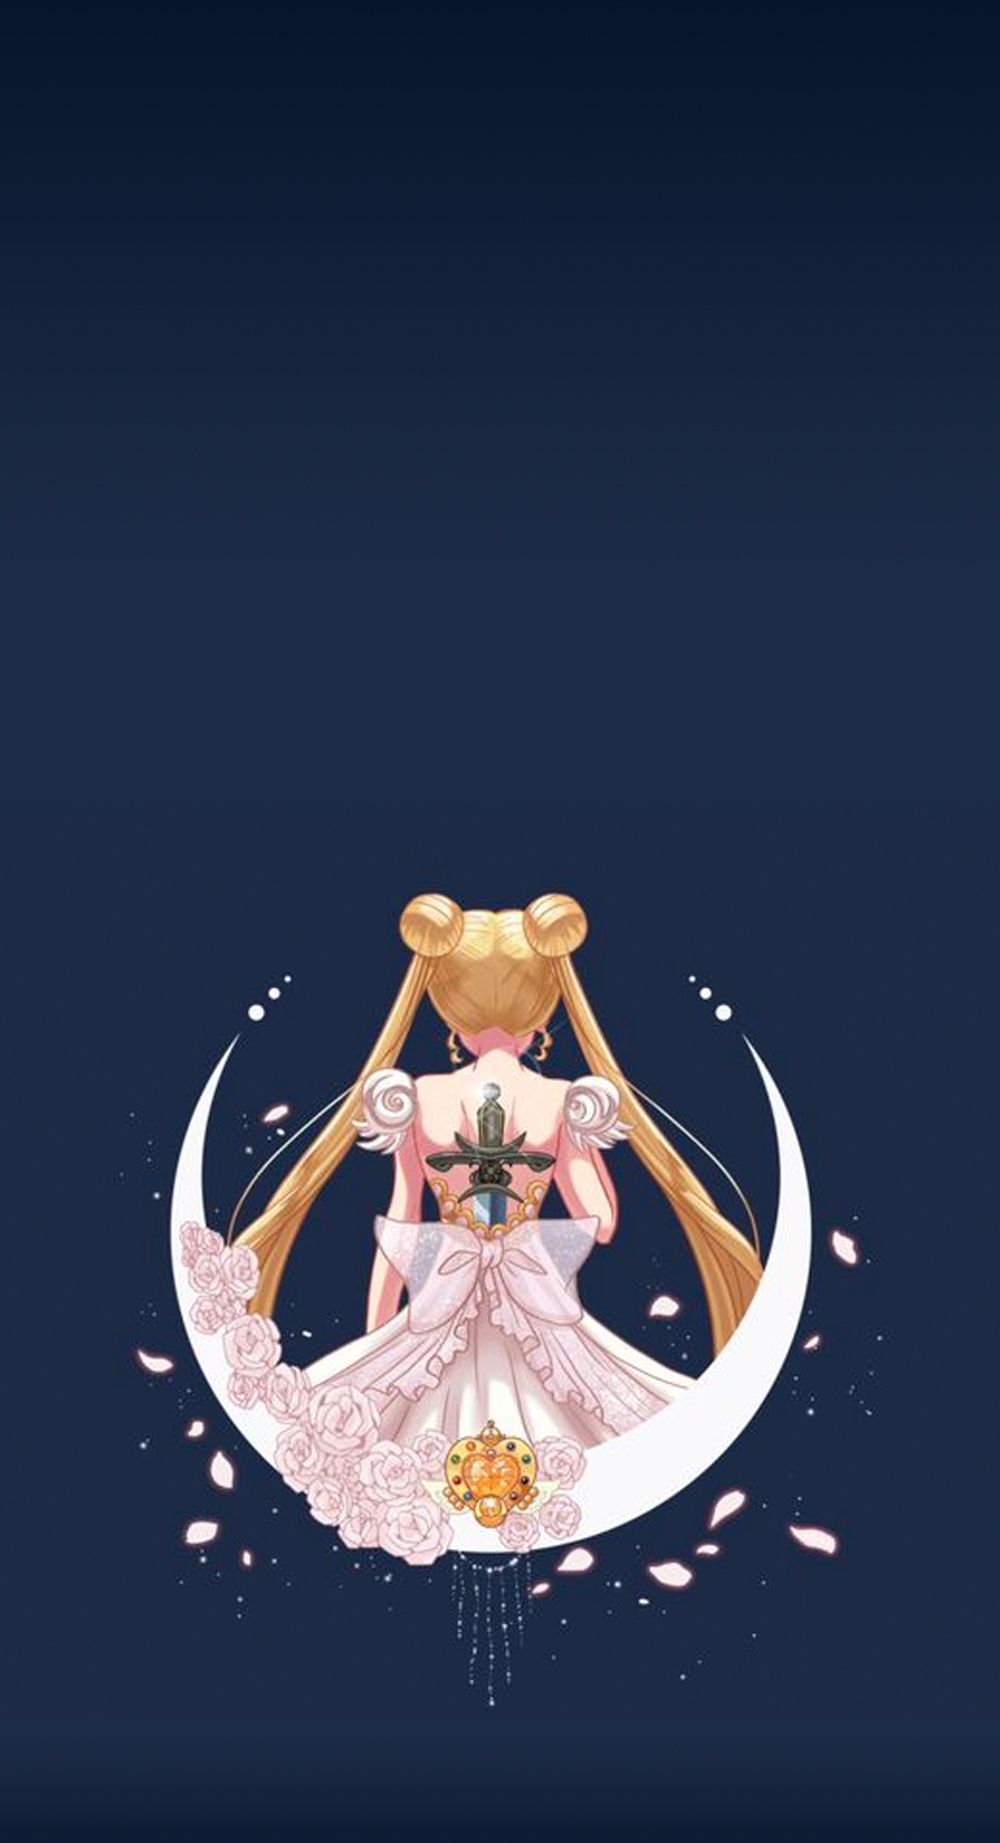 Sailor Moon Wallpaper. Sailor moon wallpaper, Sailor moon, Paper moon